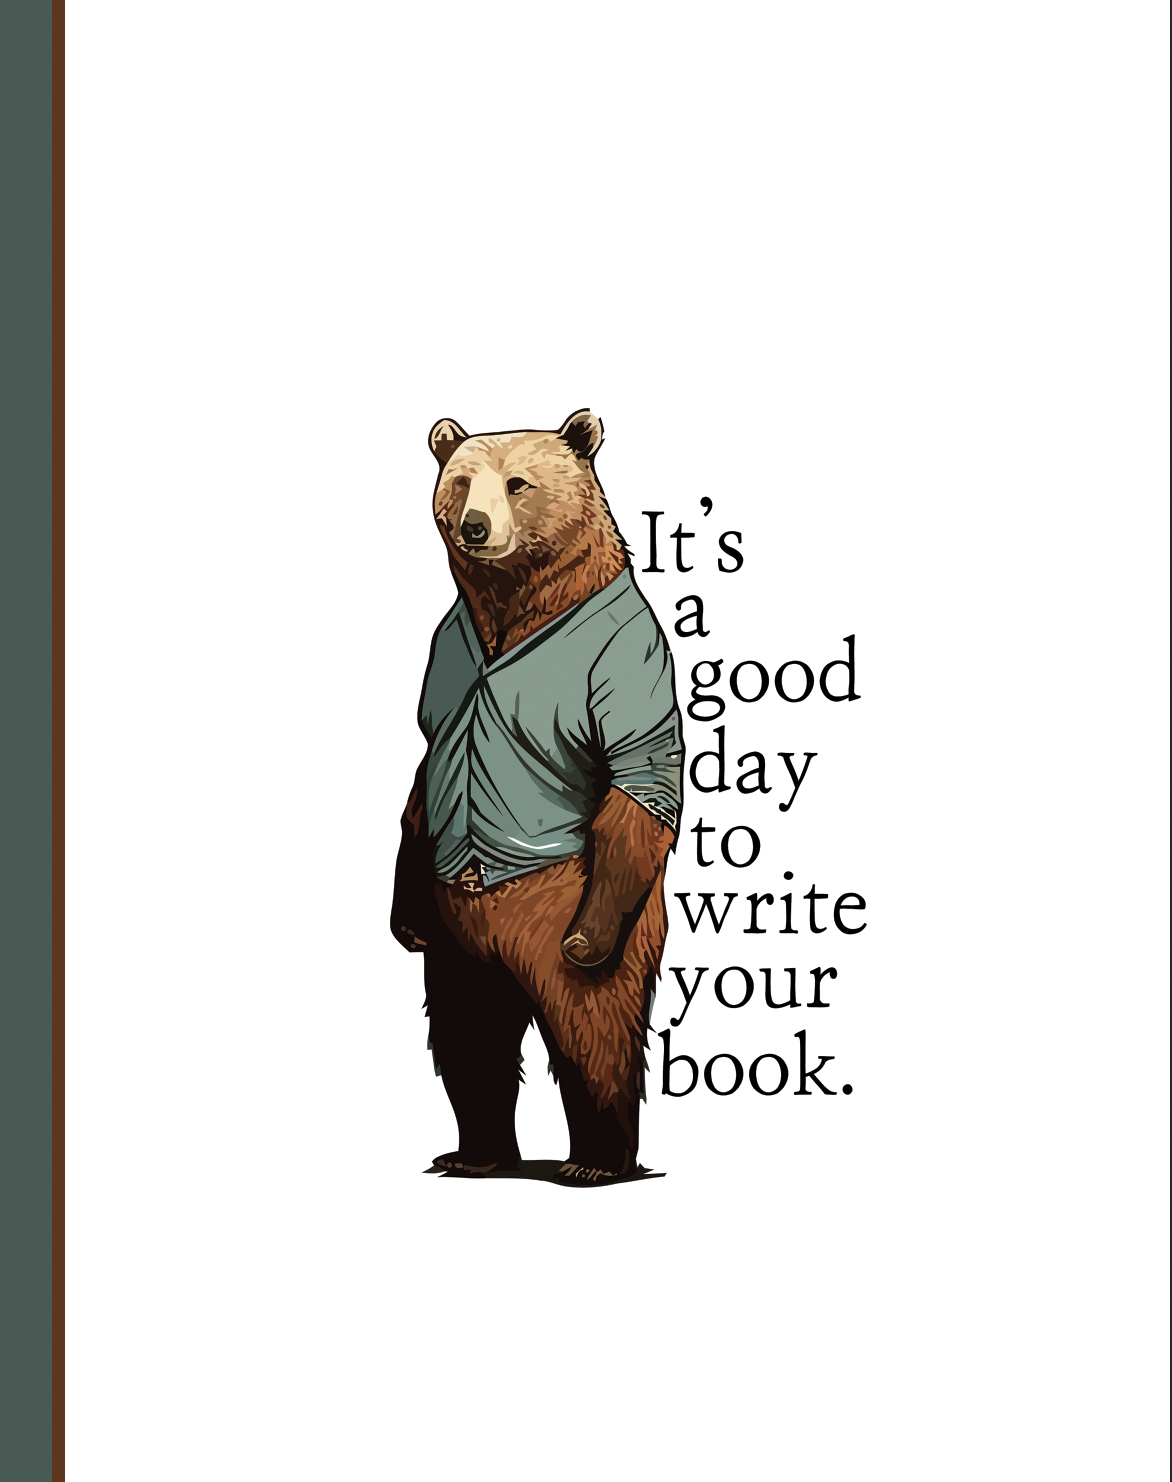 Bookish Bear Says ...